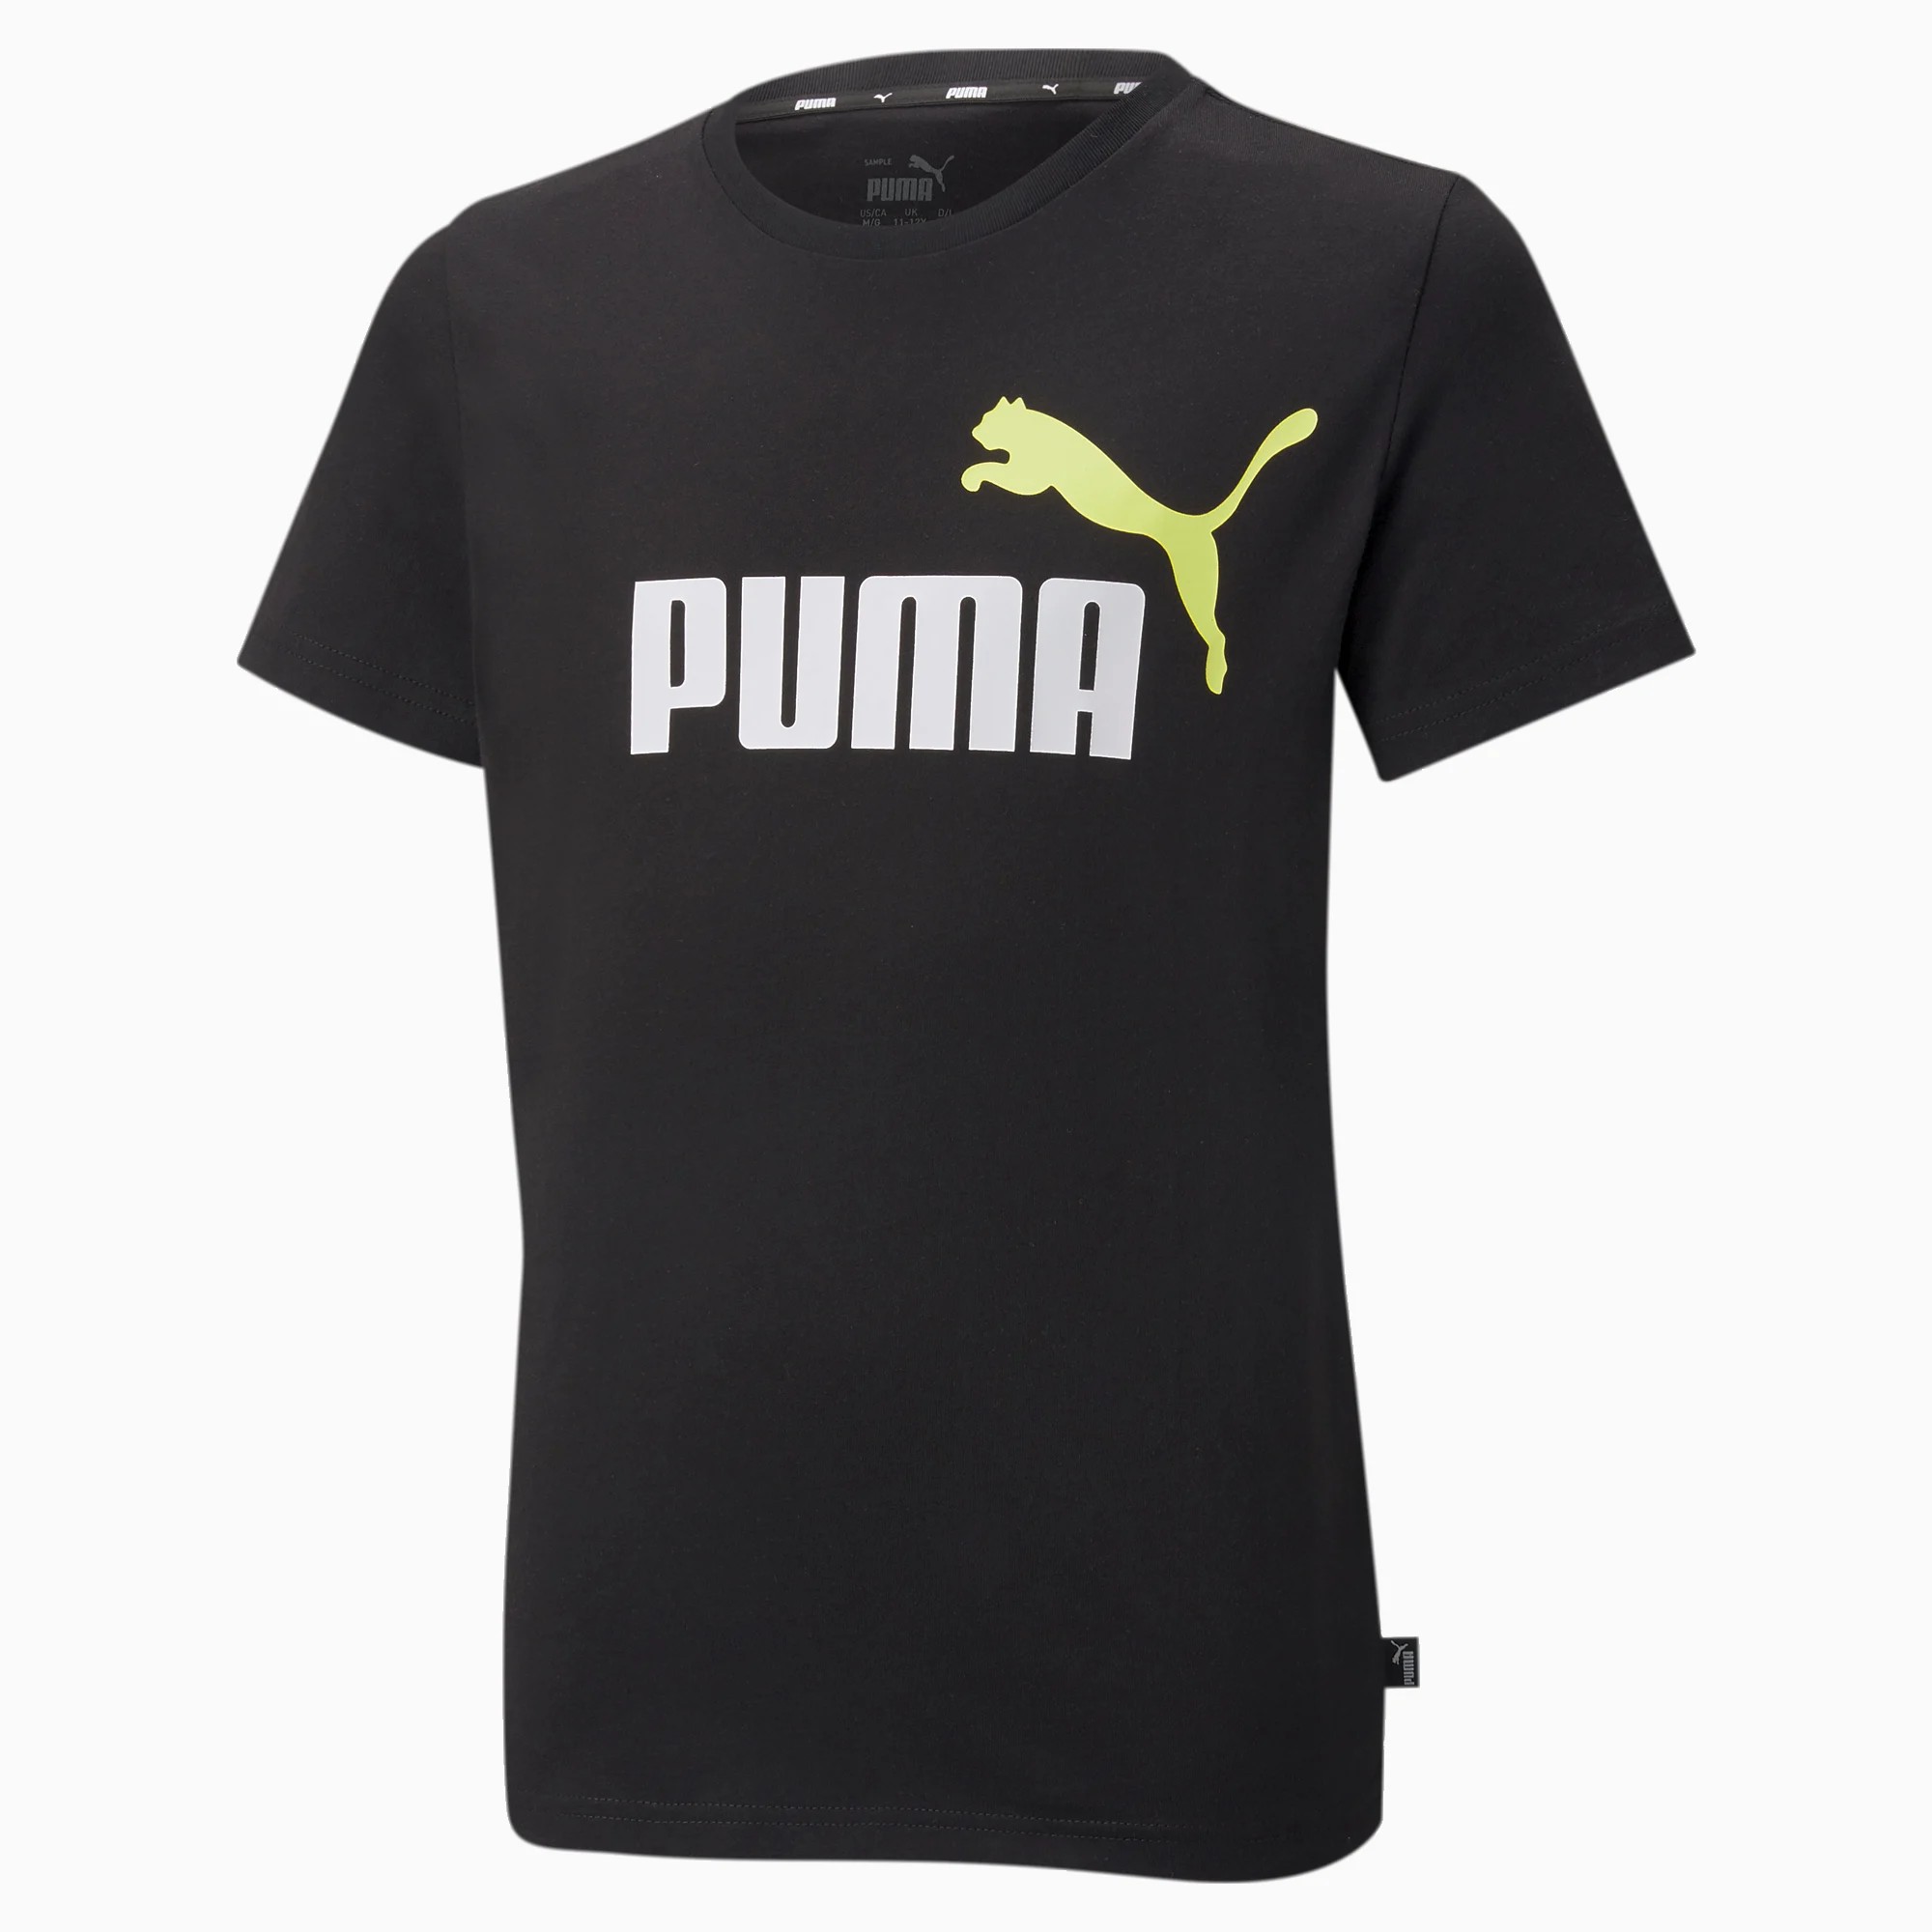 Playera Puma Essentials+ Animal Mujer